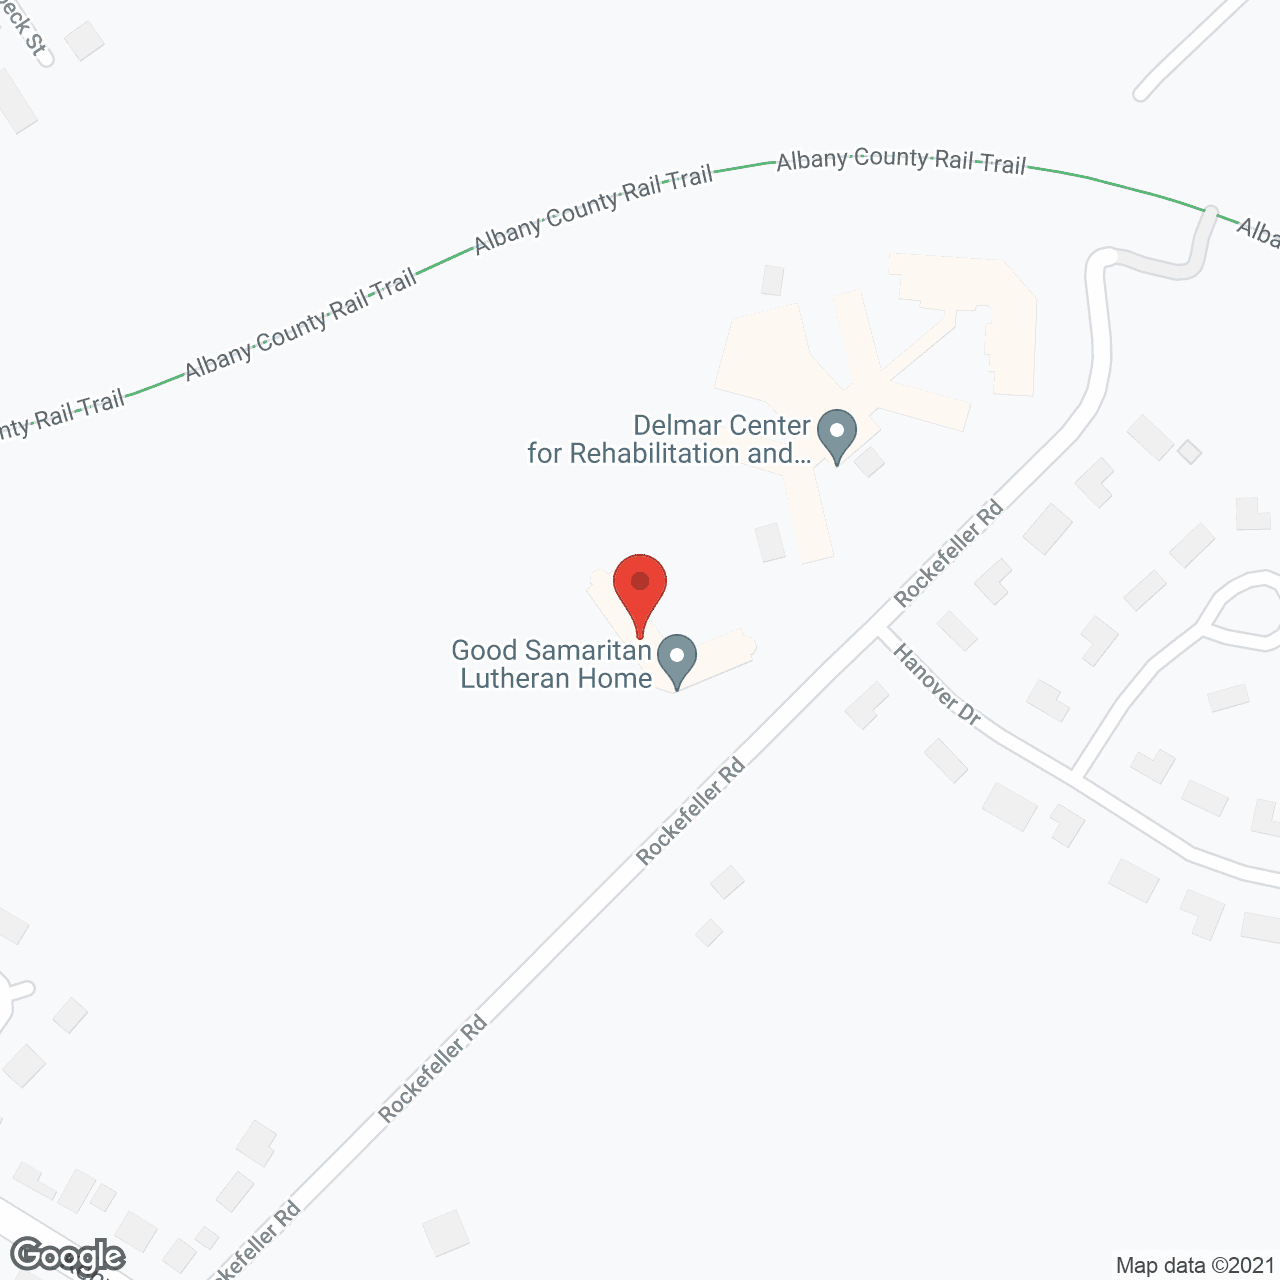 Good Samaritan Lutheran Home in google map